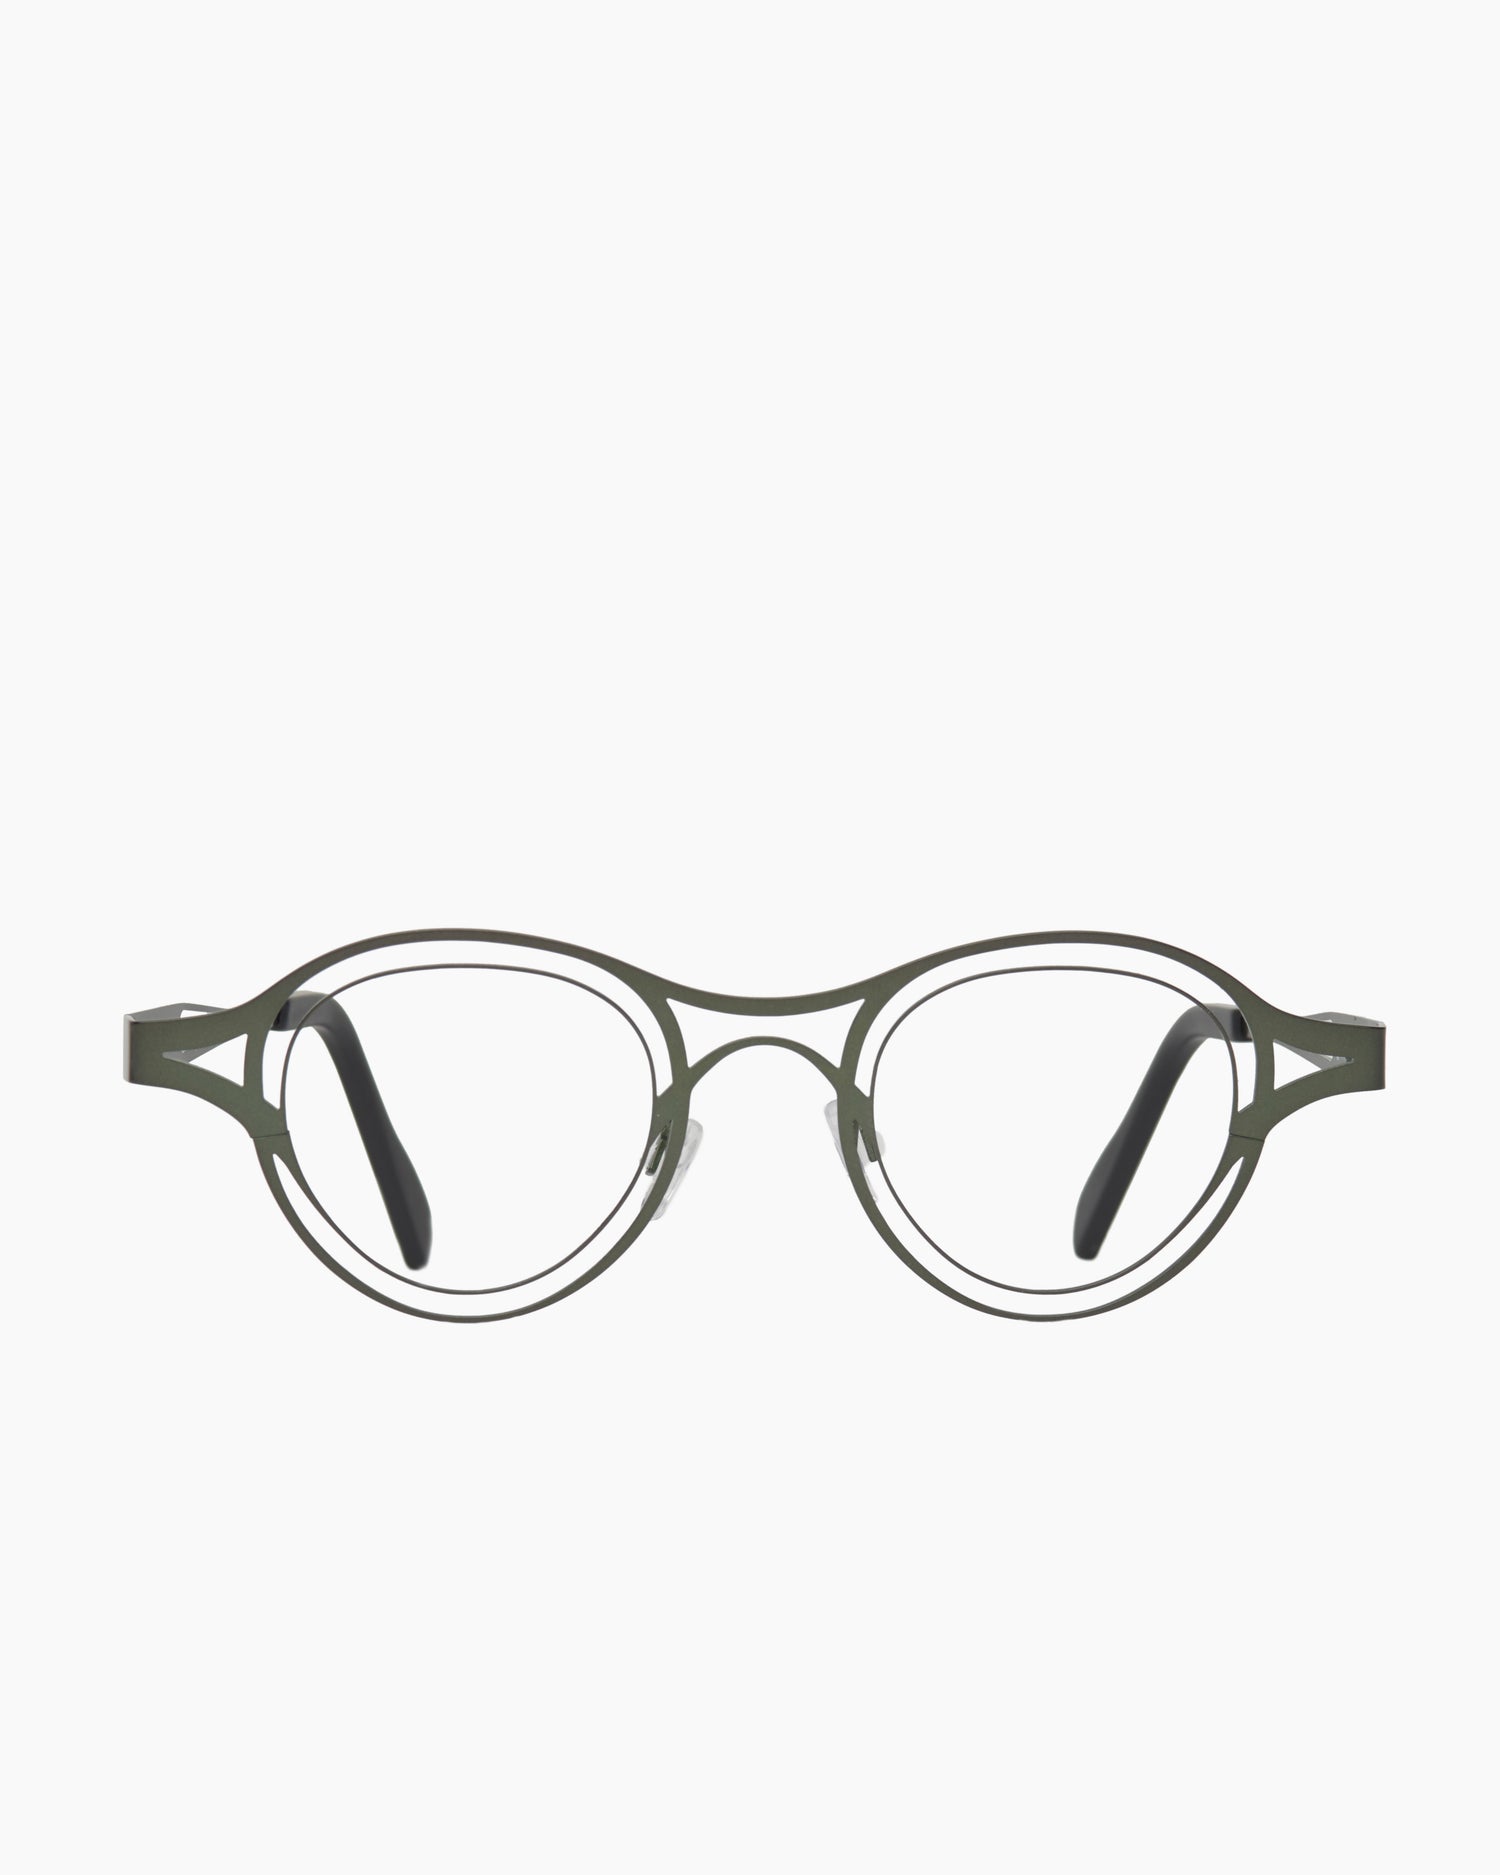 Theo - Tarifa - 508 | glasses bar:  Marie-Sophie Dion